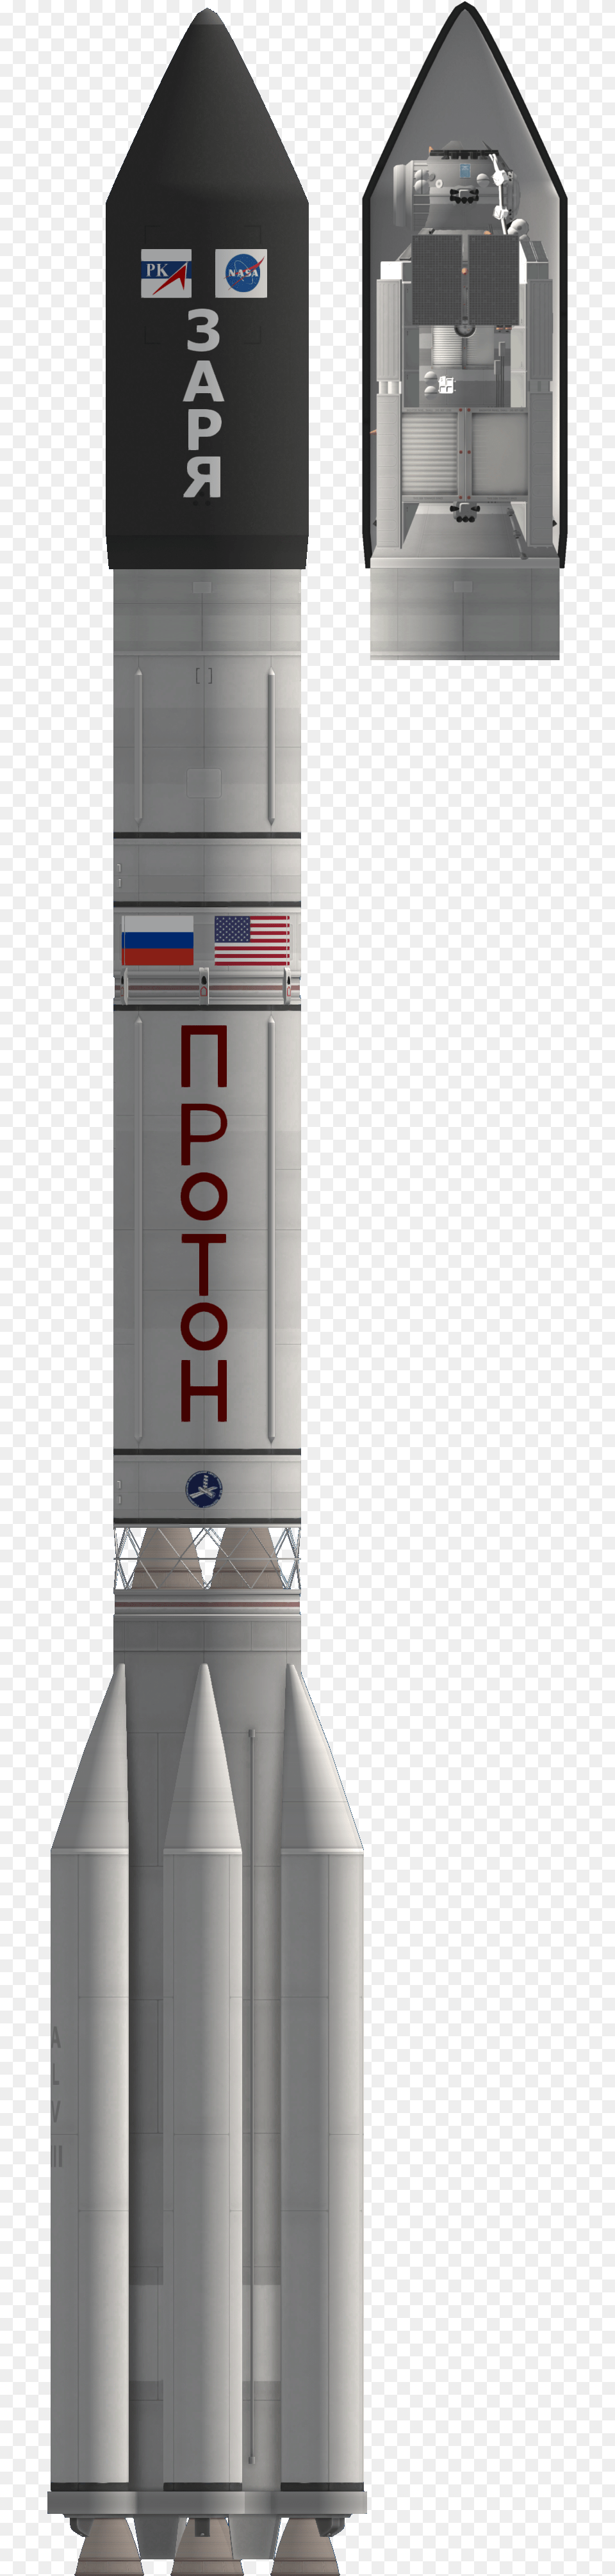 Proton Zarya, Rocket, Weapon, Aircraft, Spaceship Png Image